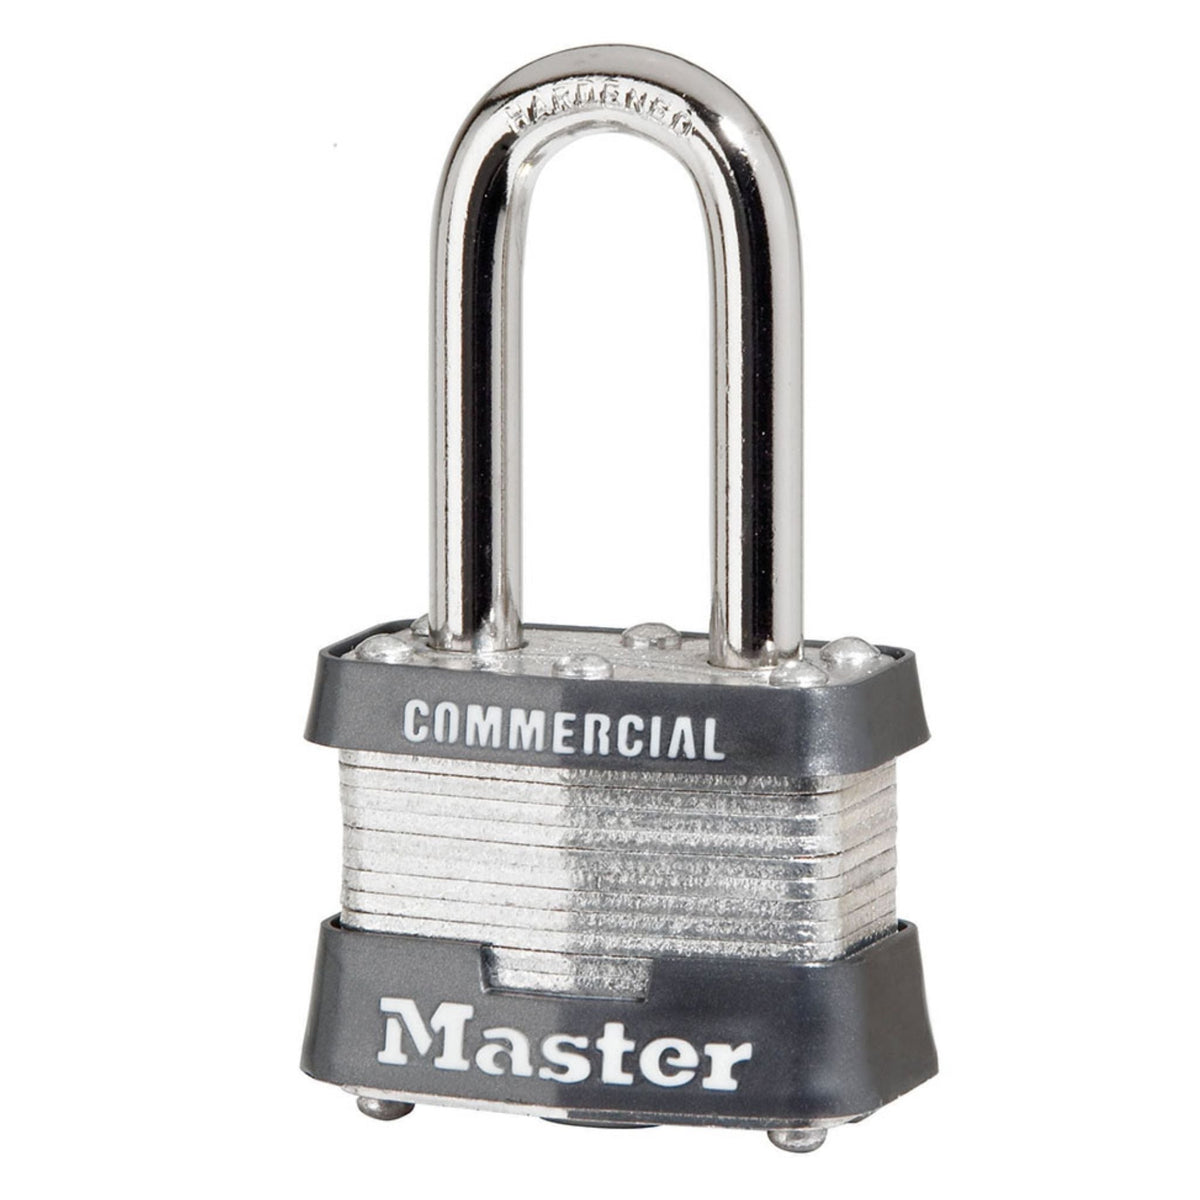 Master Lock 3KALF 3576 Laminated Steel Locks Keyed Alike to Match Key Number KA3576 with 1.5-Inch Shackle - The Lock Source